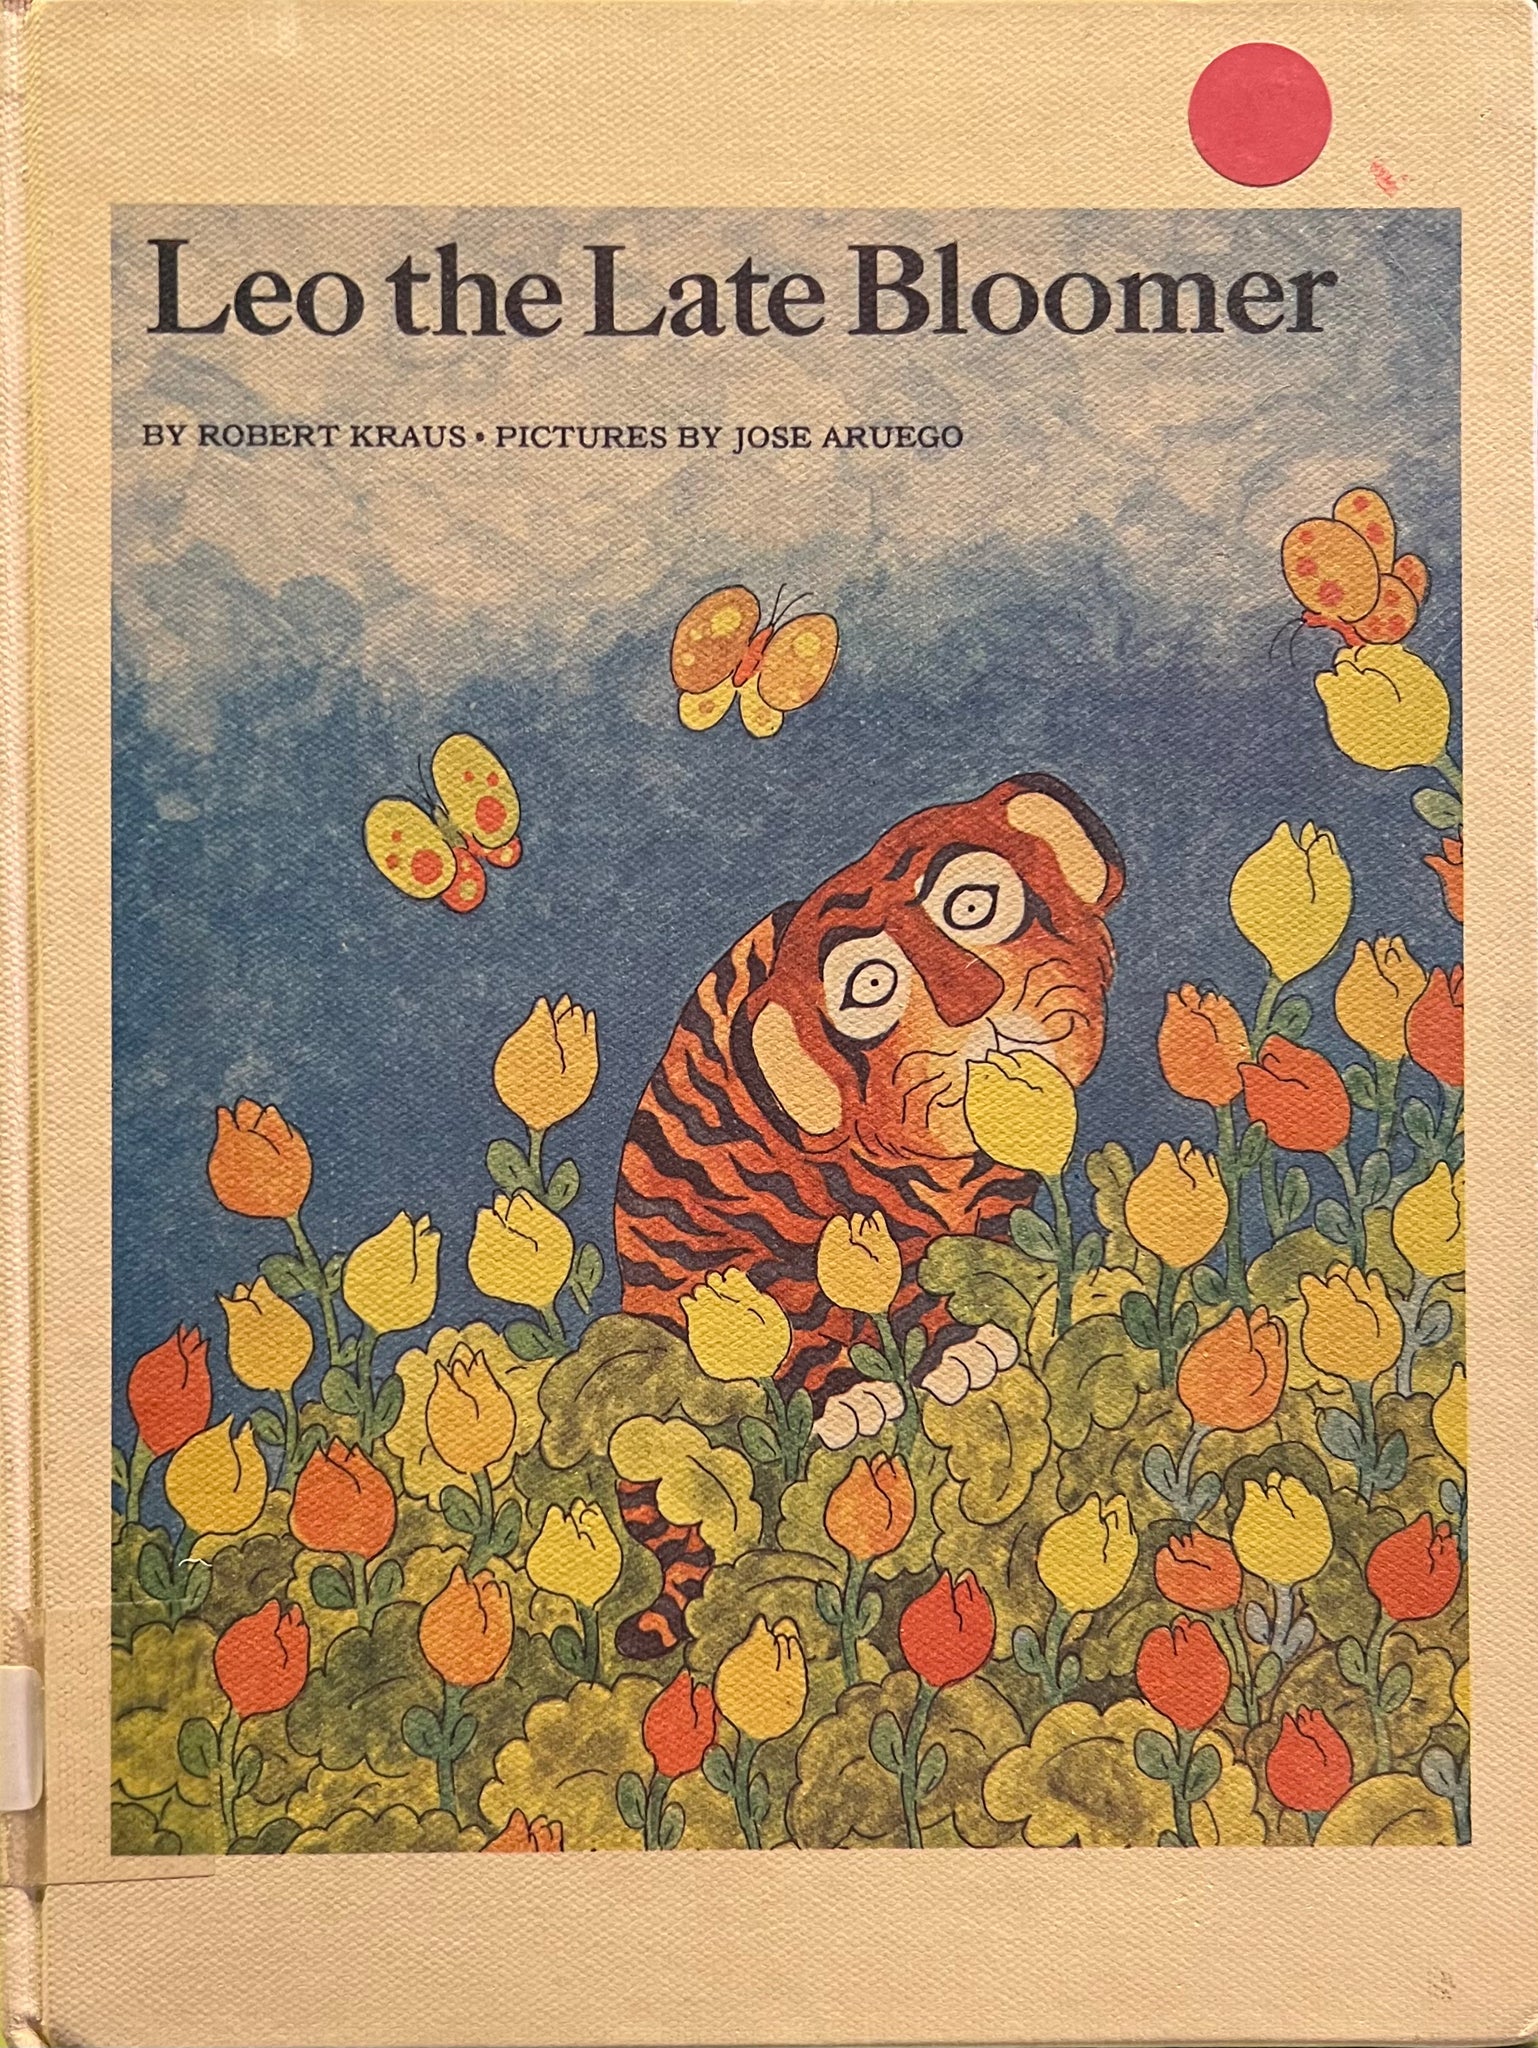 Leo the Late Bloomer, Robert Kraus